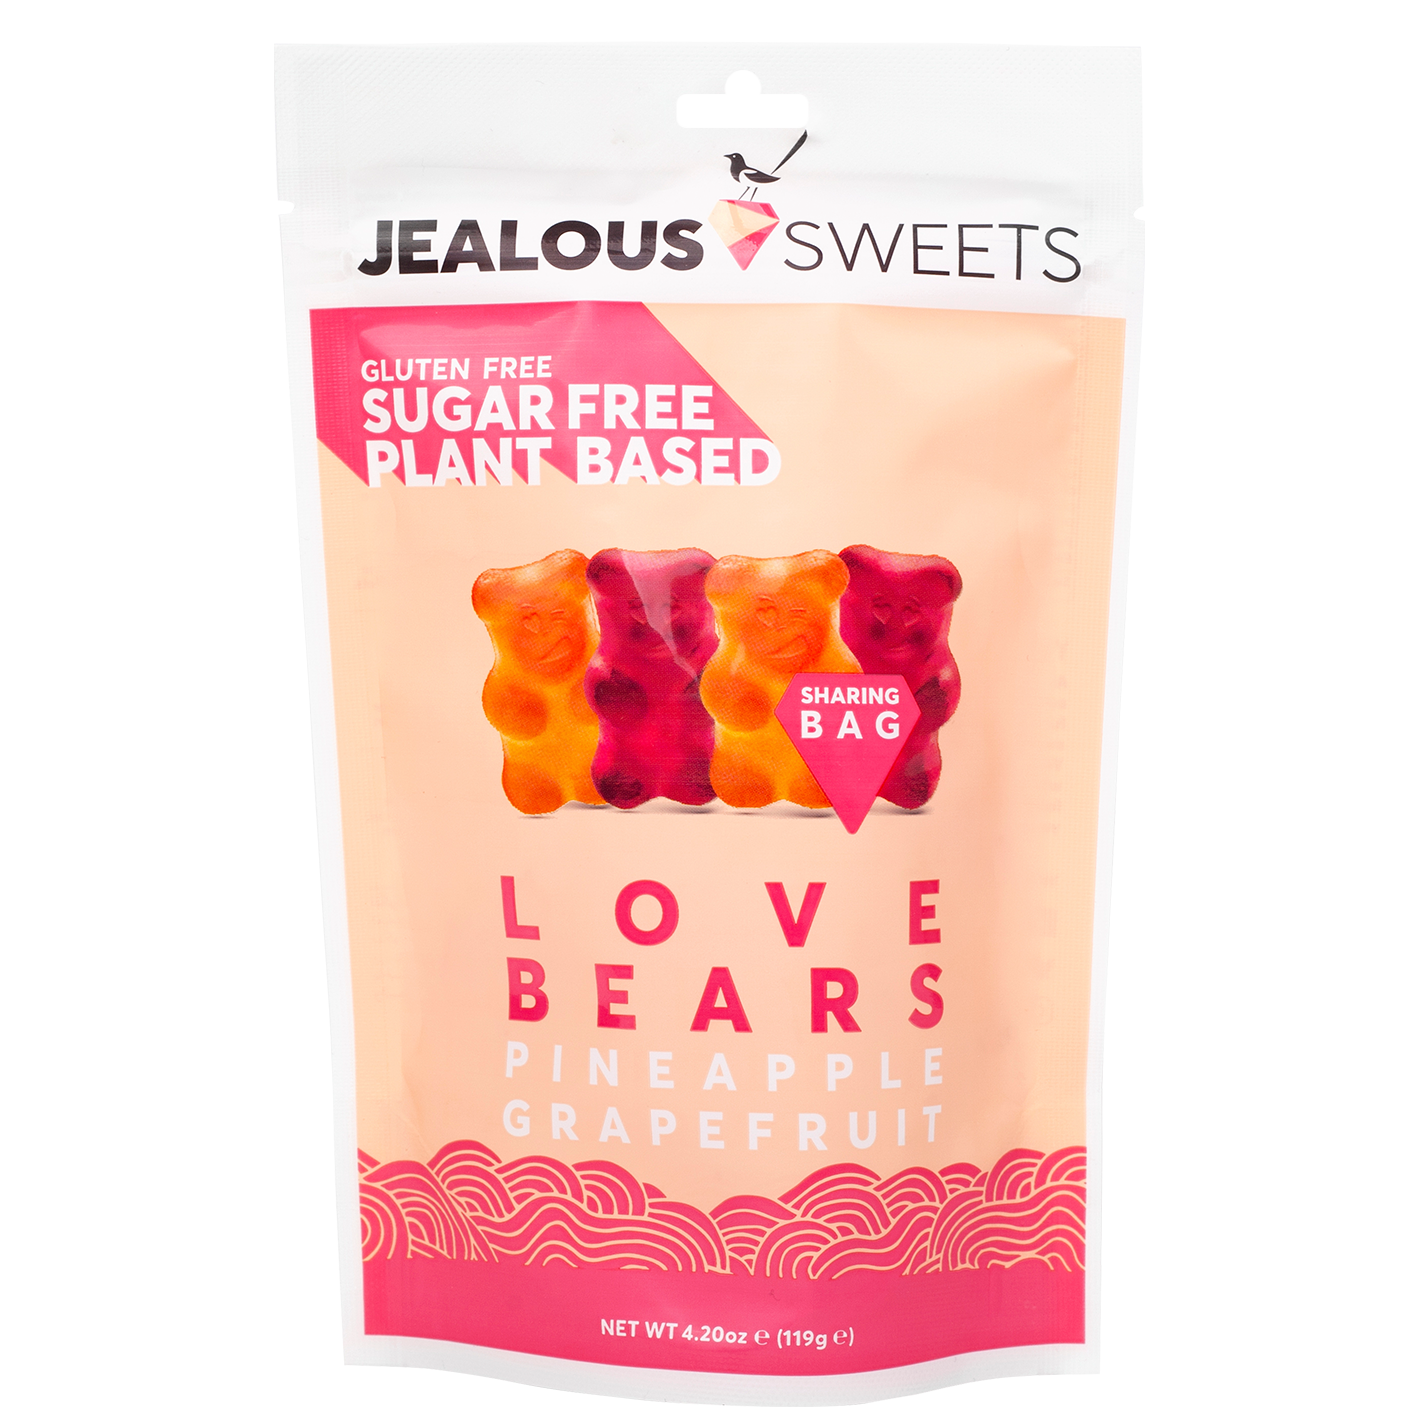 Jealous Sweets Love Bears 7 units per case 4.2 oz